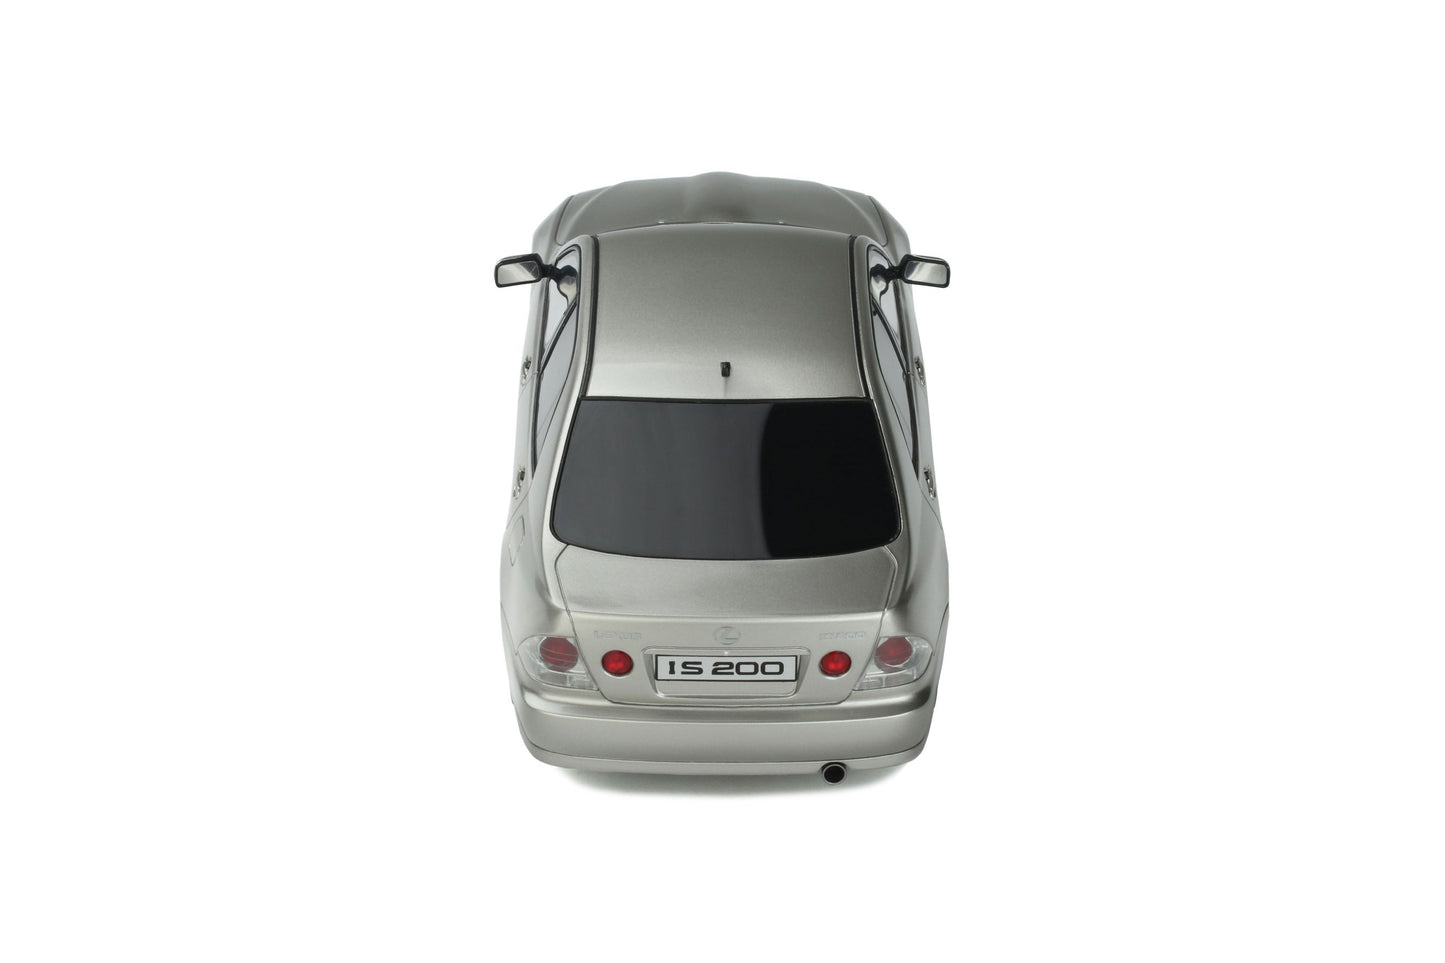 OttOmobile - Lexus IS200 (Millennium Silver Metallic) 1:18 Scale Model Car